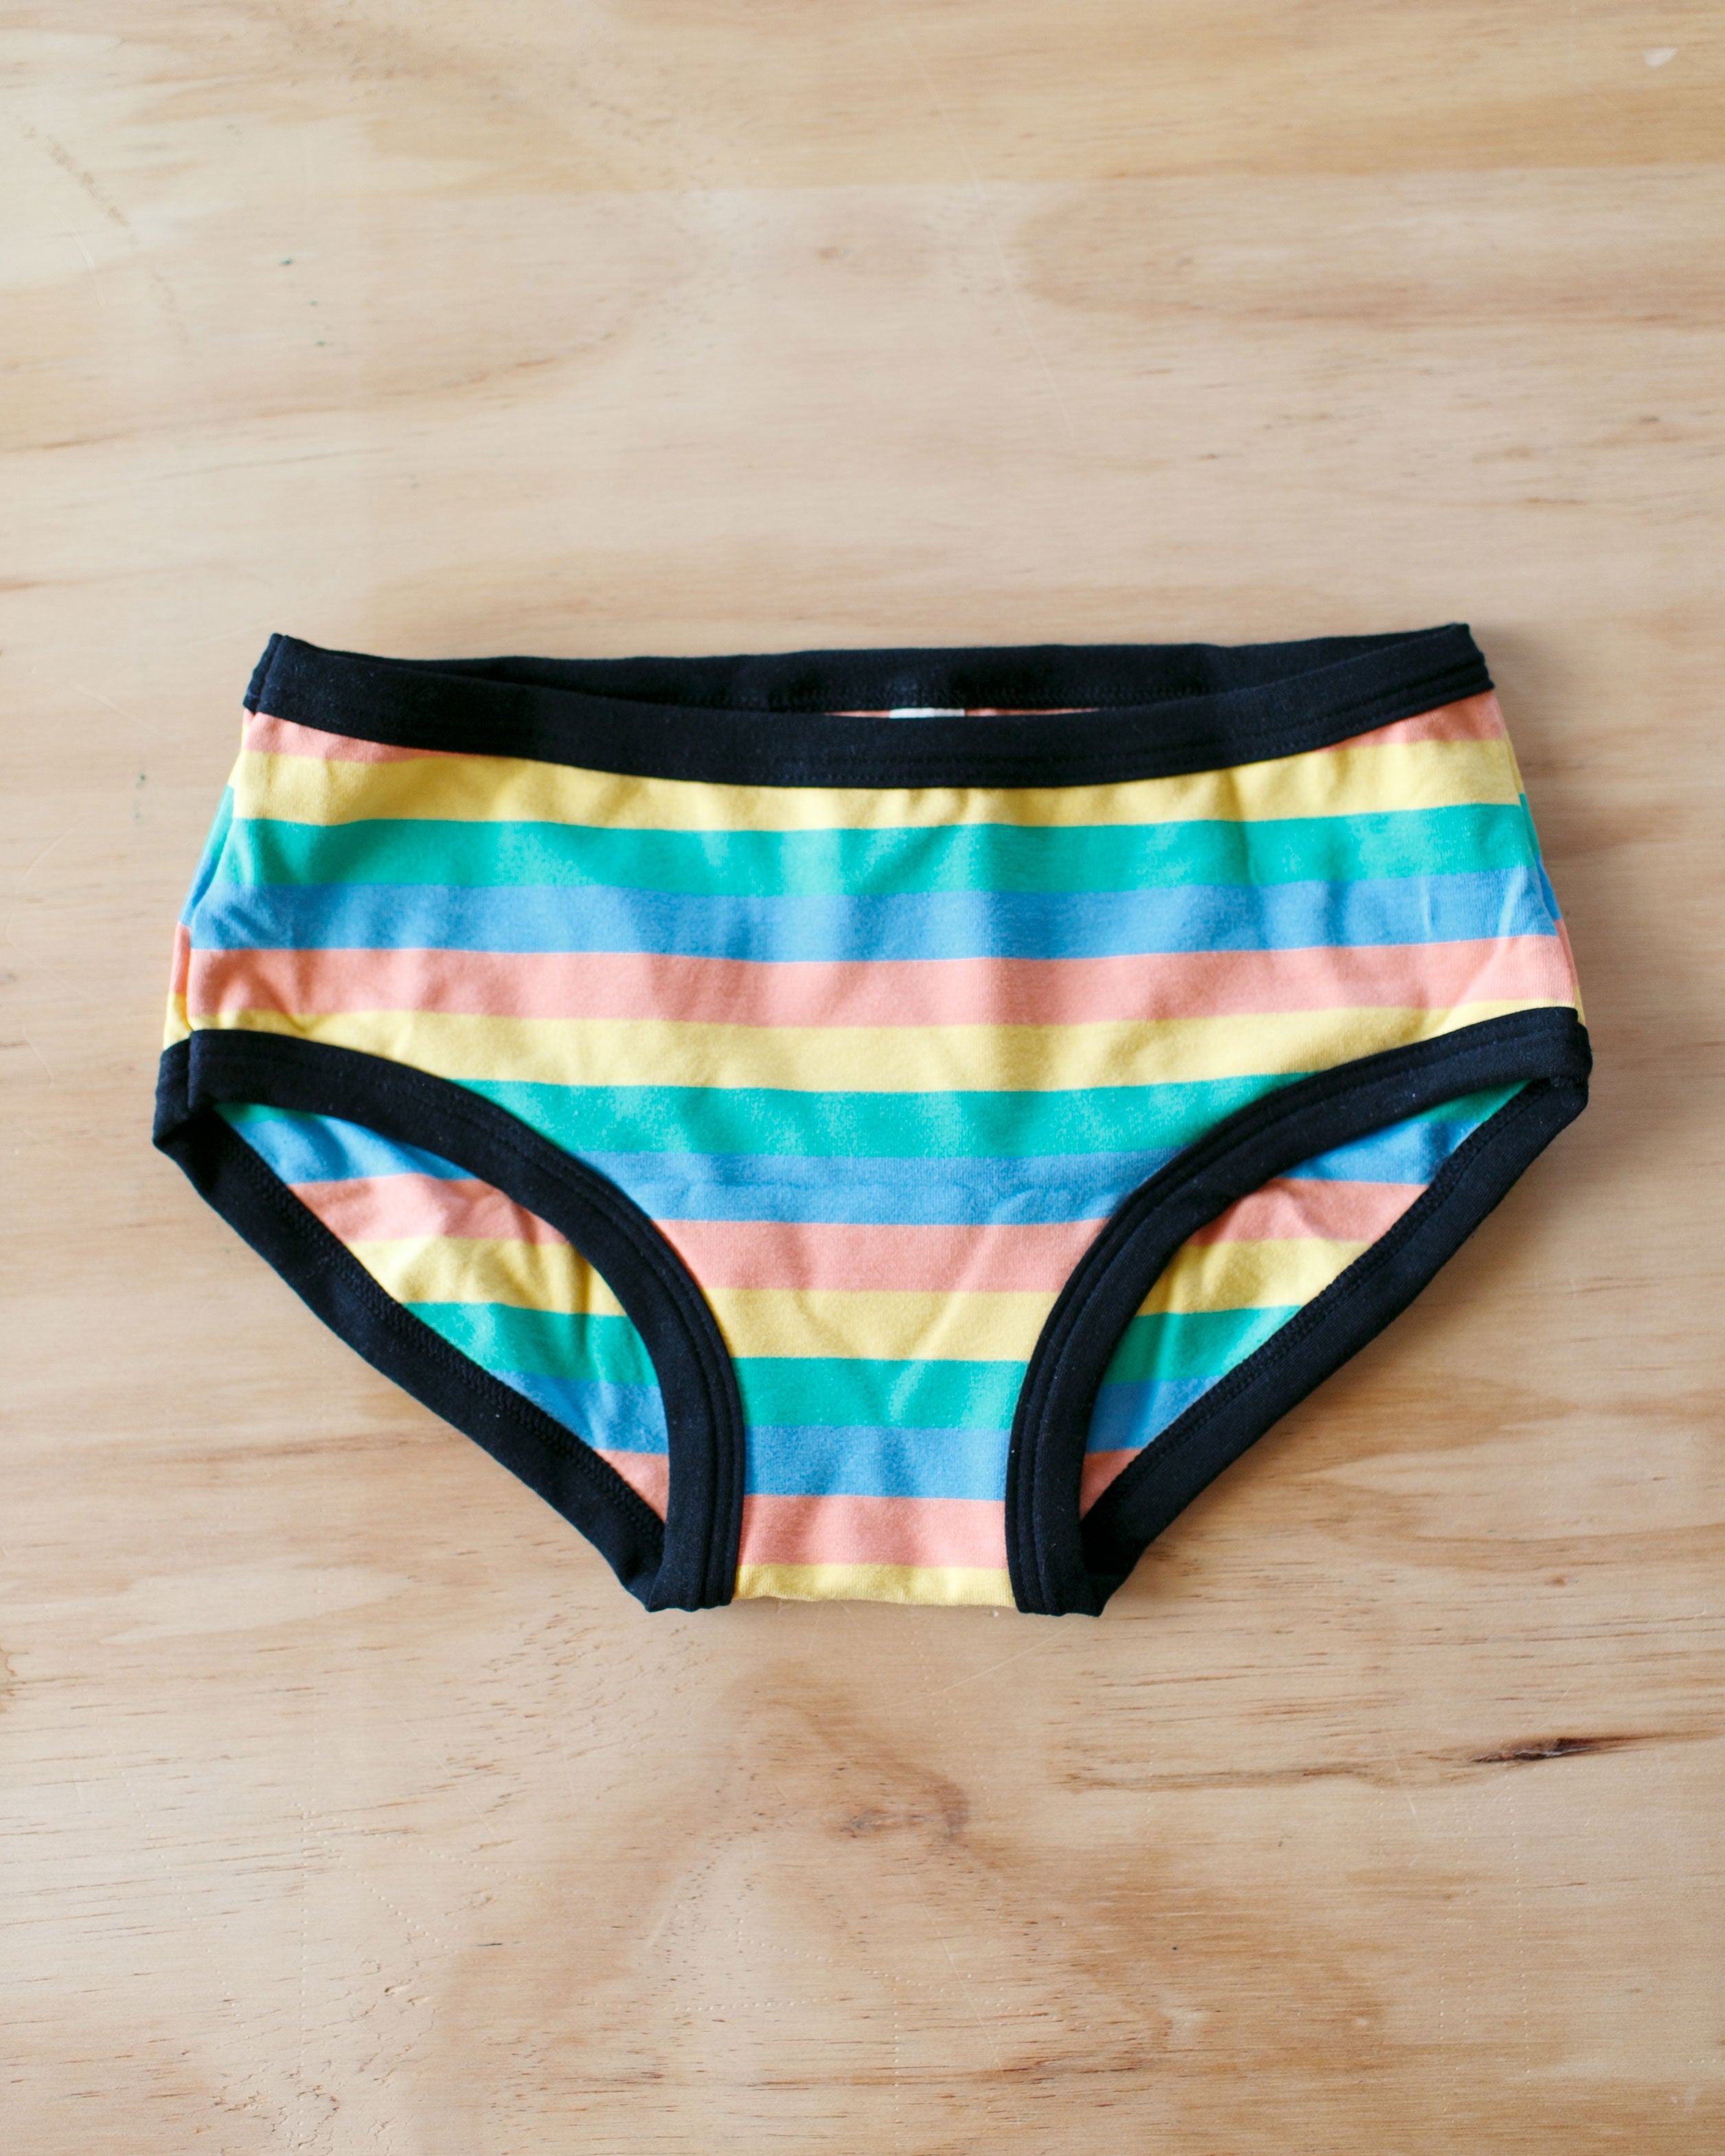 Flat lay of Thunderpants Kids style underwear in Pastel Rainbow Stripes.